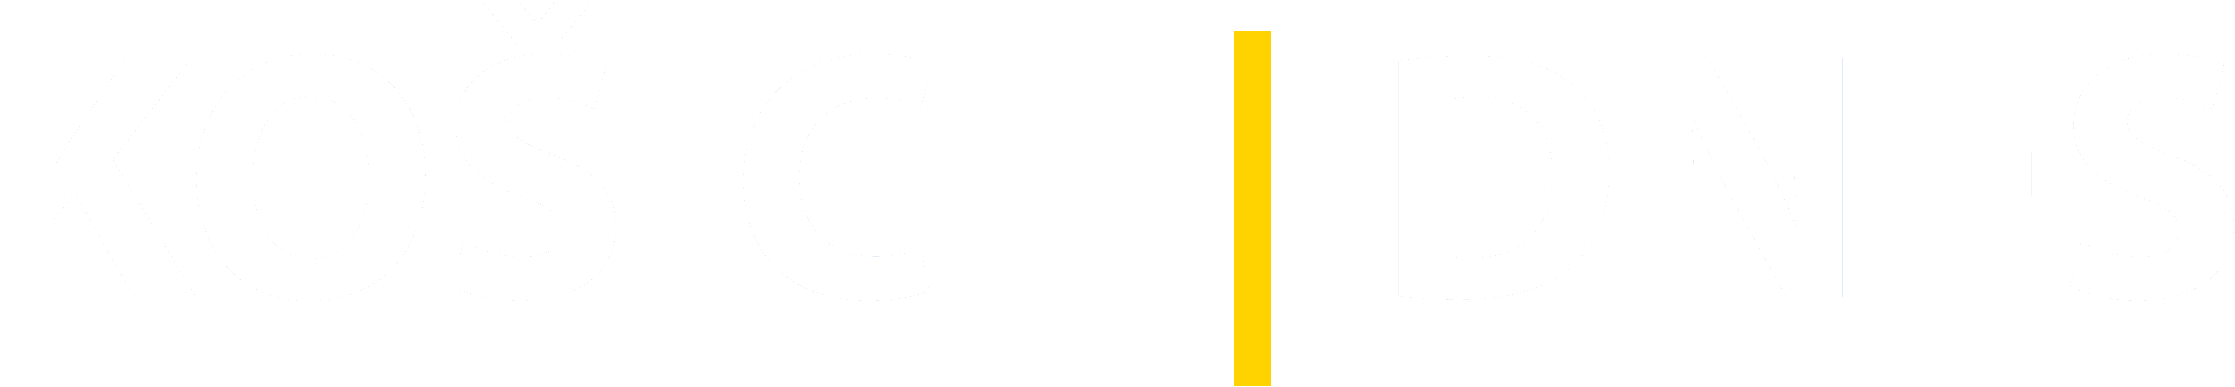 KOŠICE:DNES logo